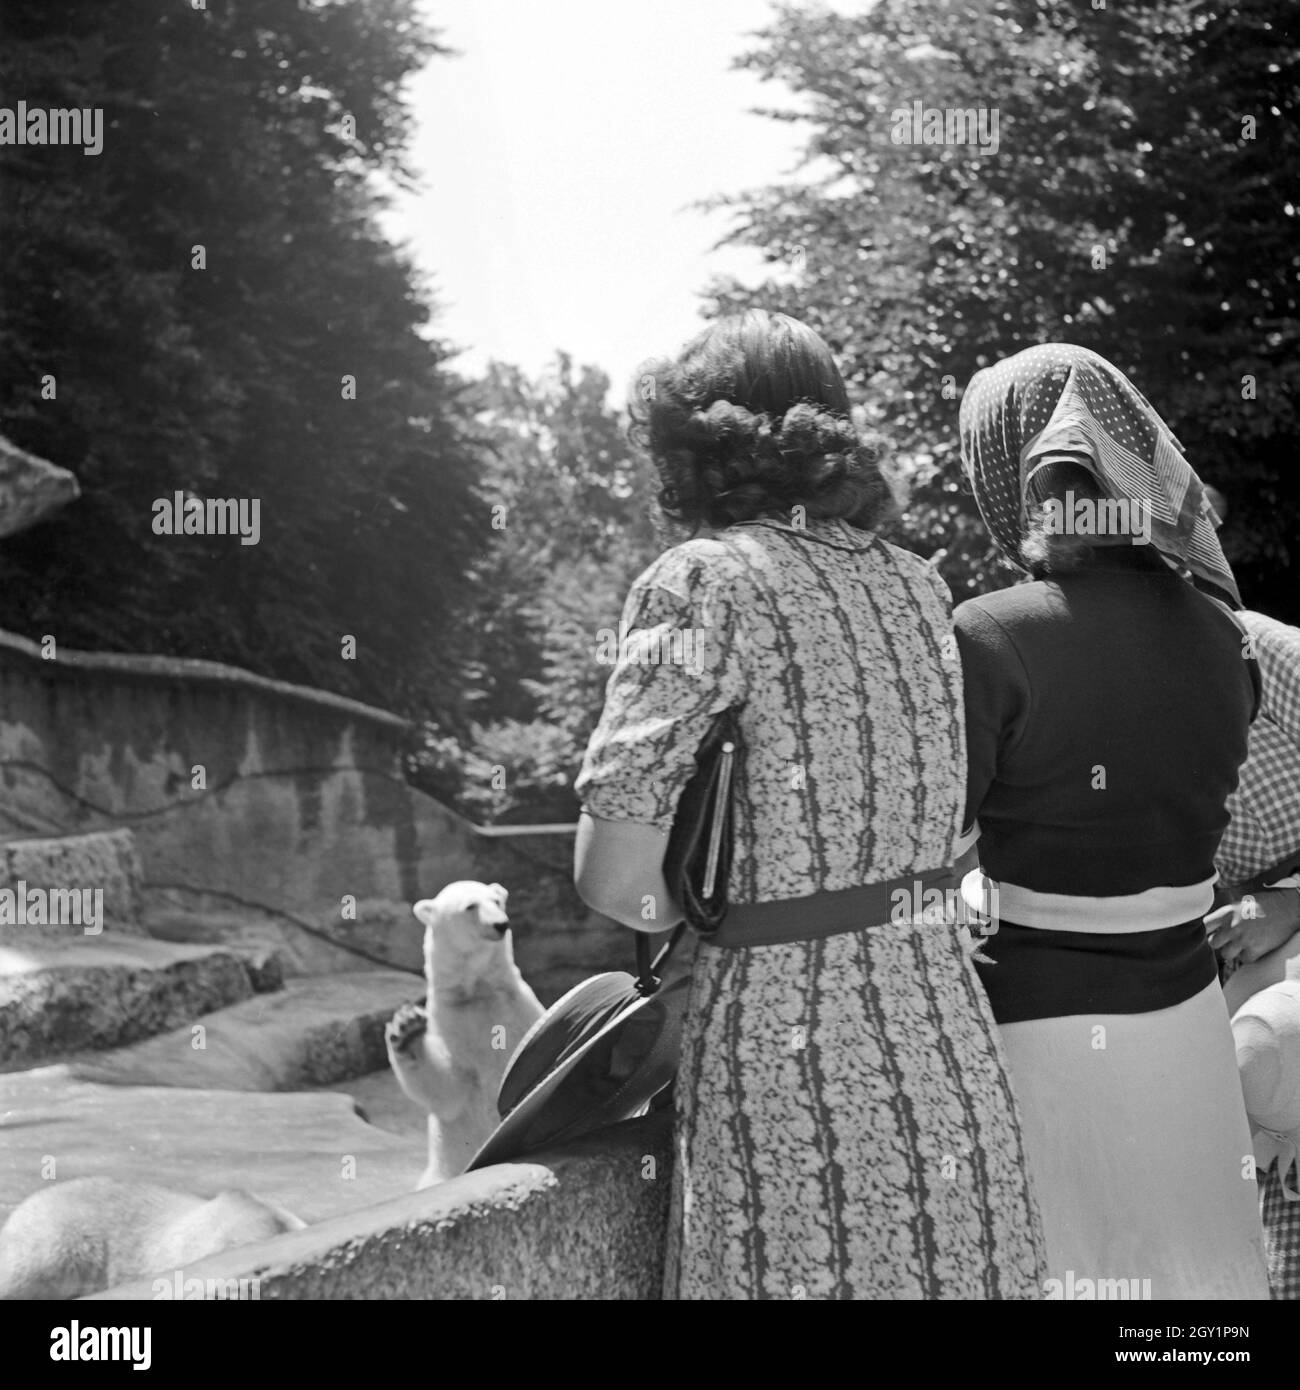 Drei junge Frauen stehen beim Zoobesuch am Eisbärgehege, Deutschland 1930er Jahre. Three young woman visiting a zoological garden and see the polar bear's compound, Germany 1930s. Stock Photo